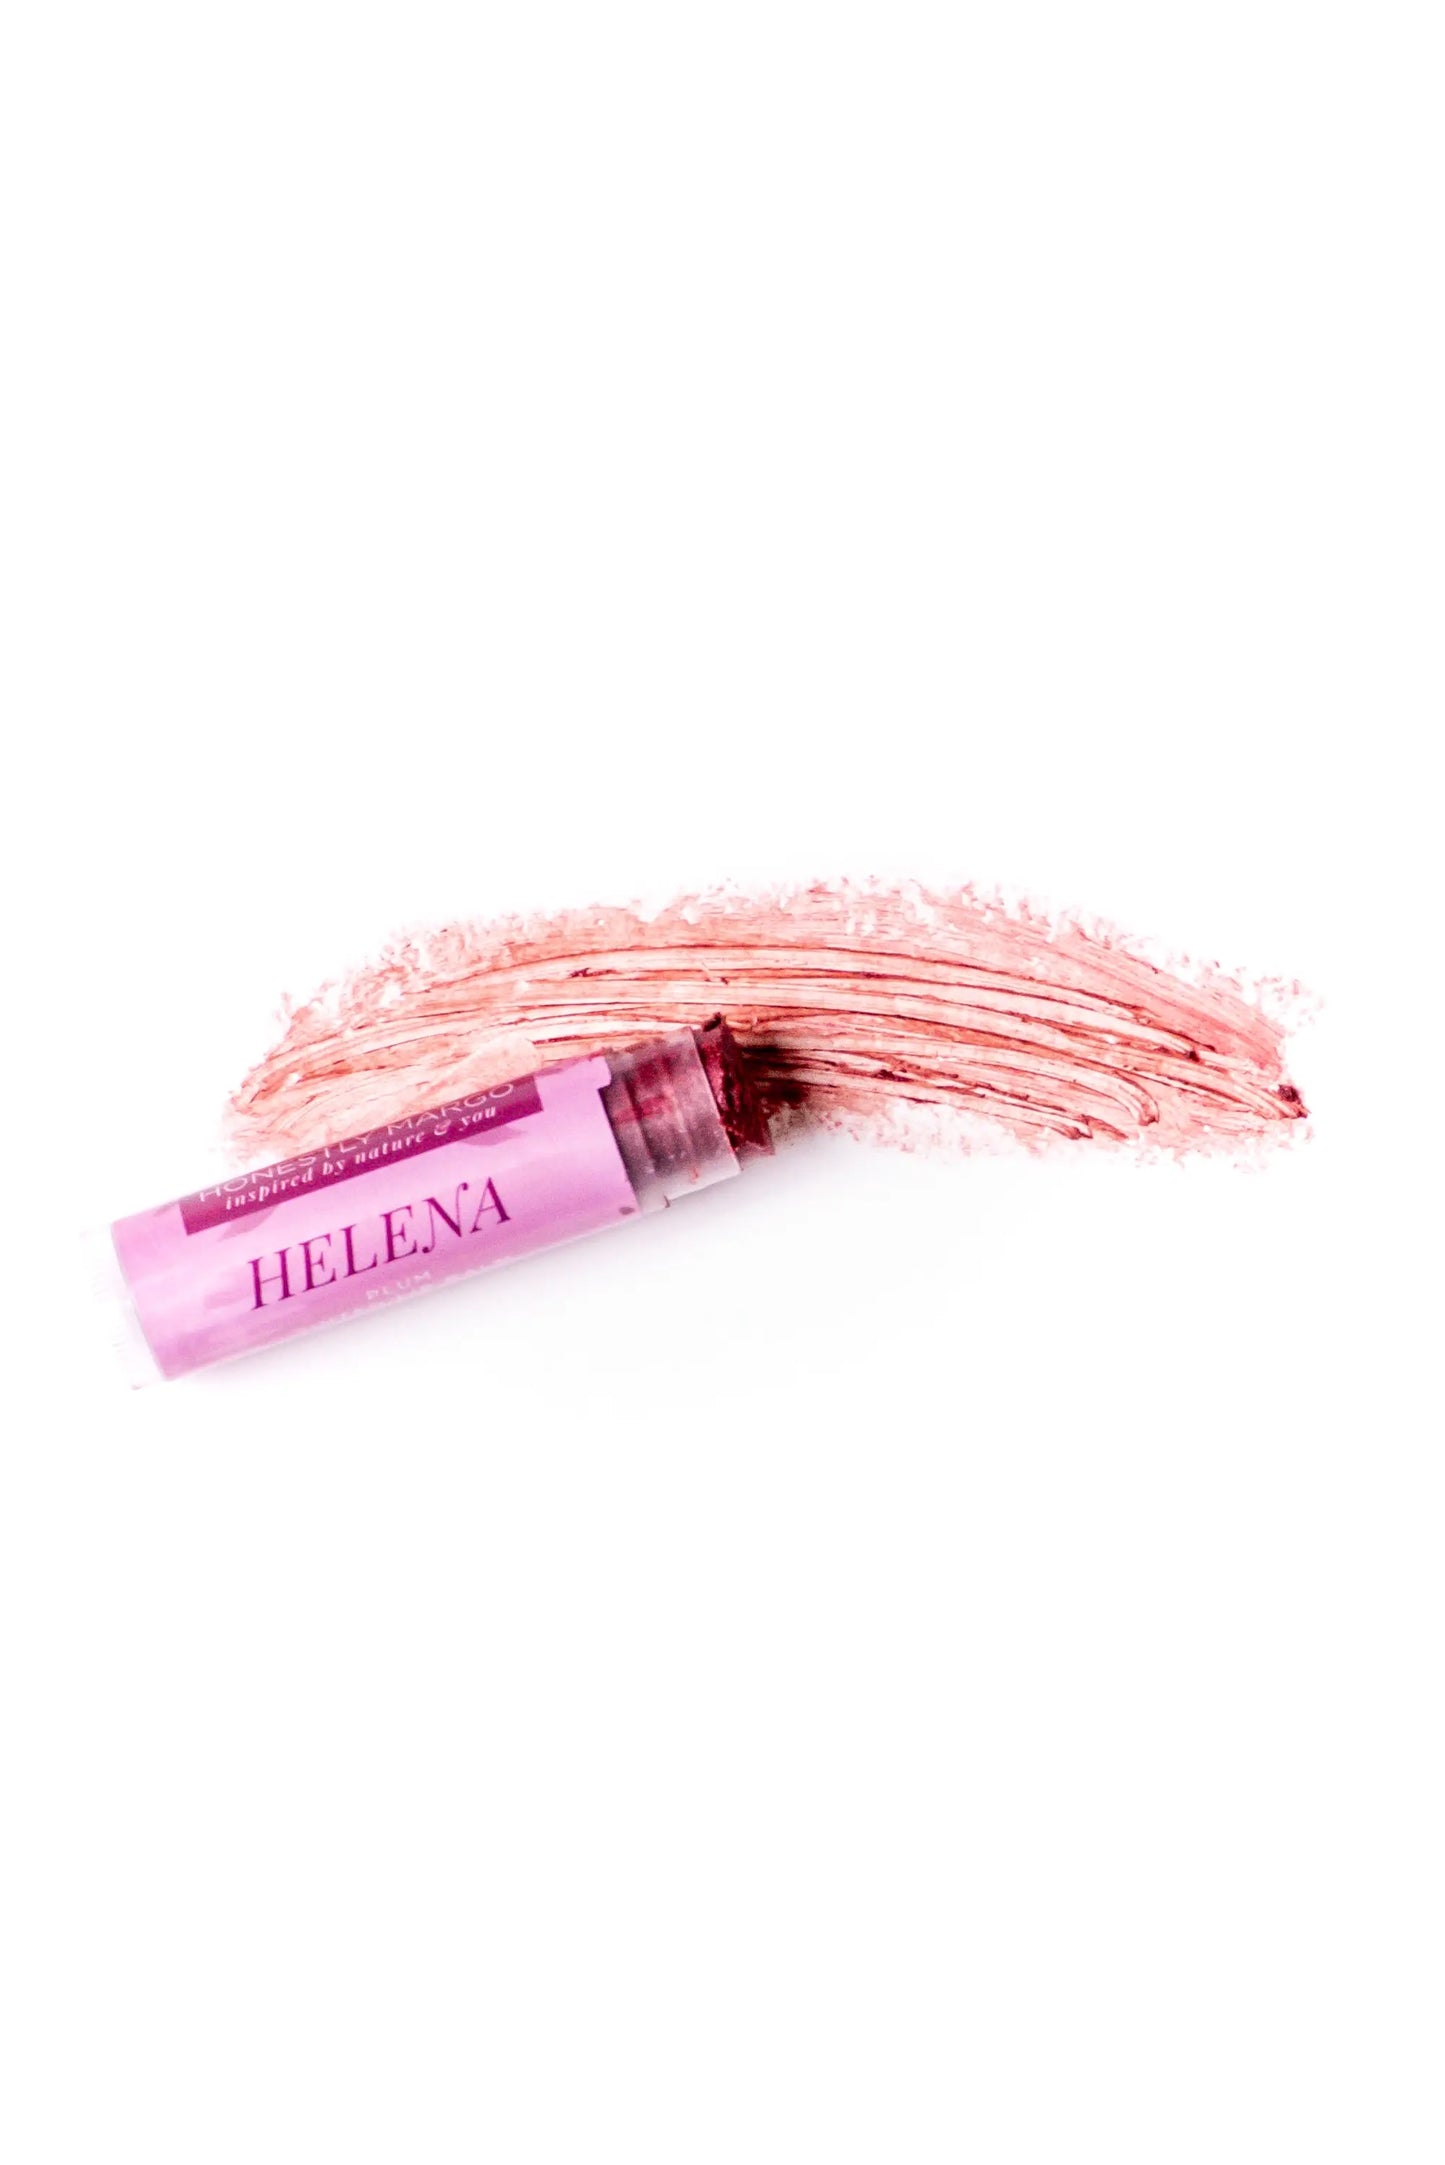 Tinted Lip Balm - Plum Helena